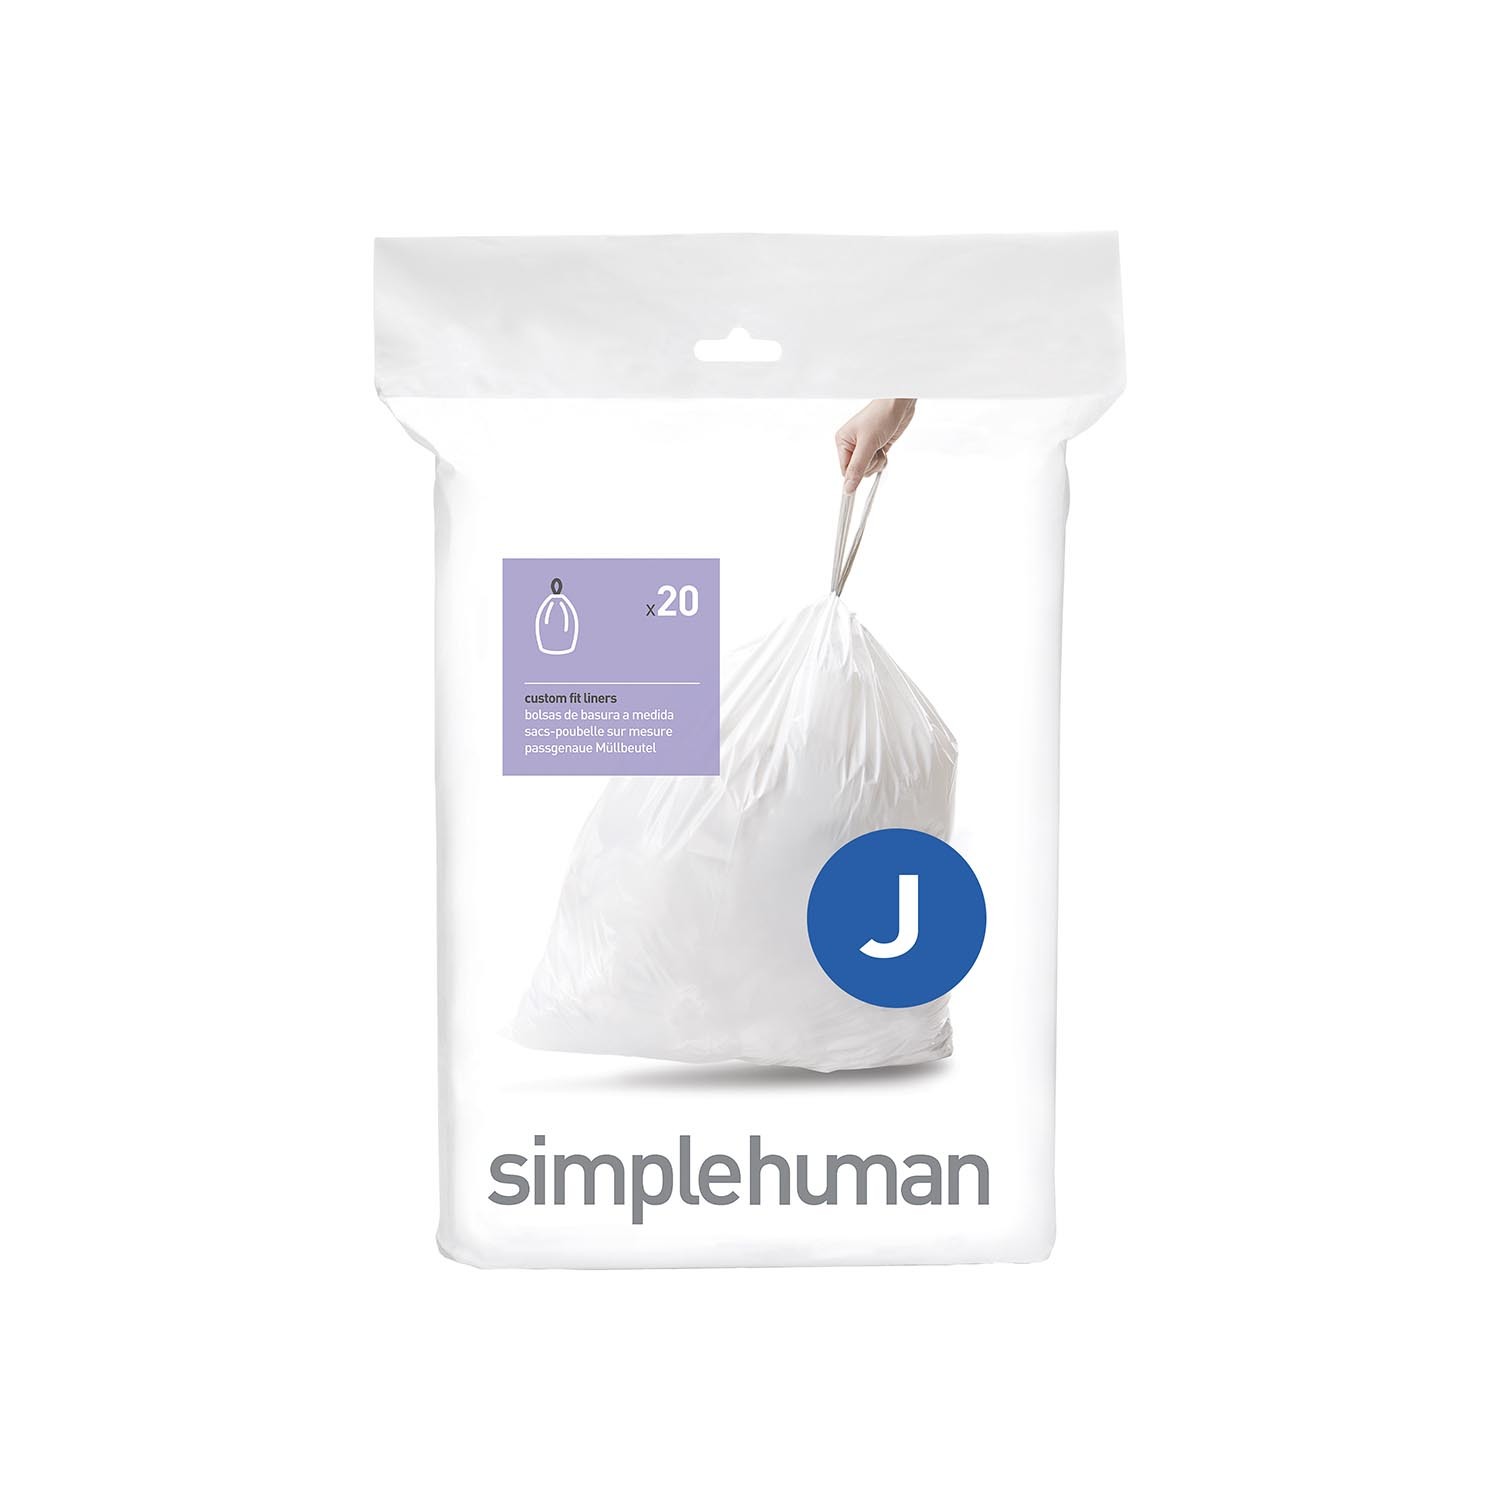 simplehuman custom fit bin liners - J / 20 Image 1